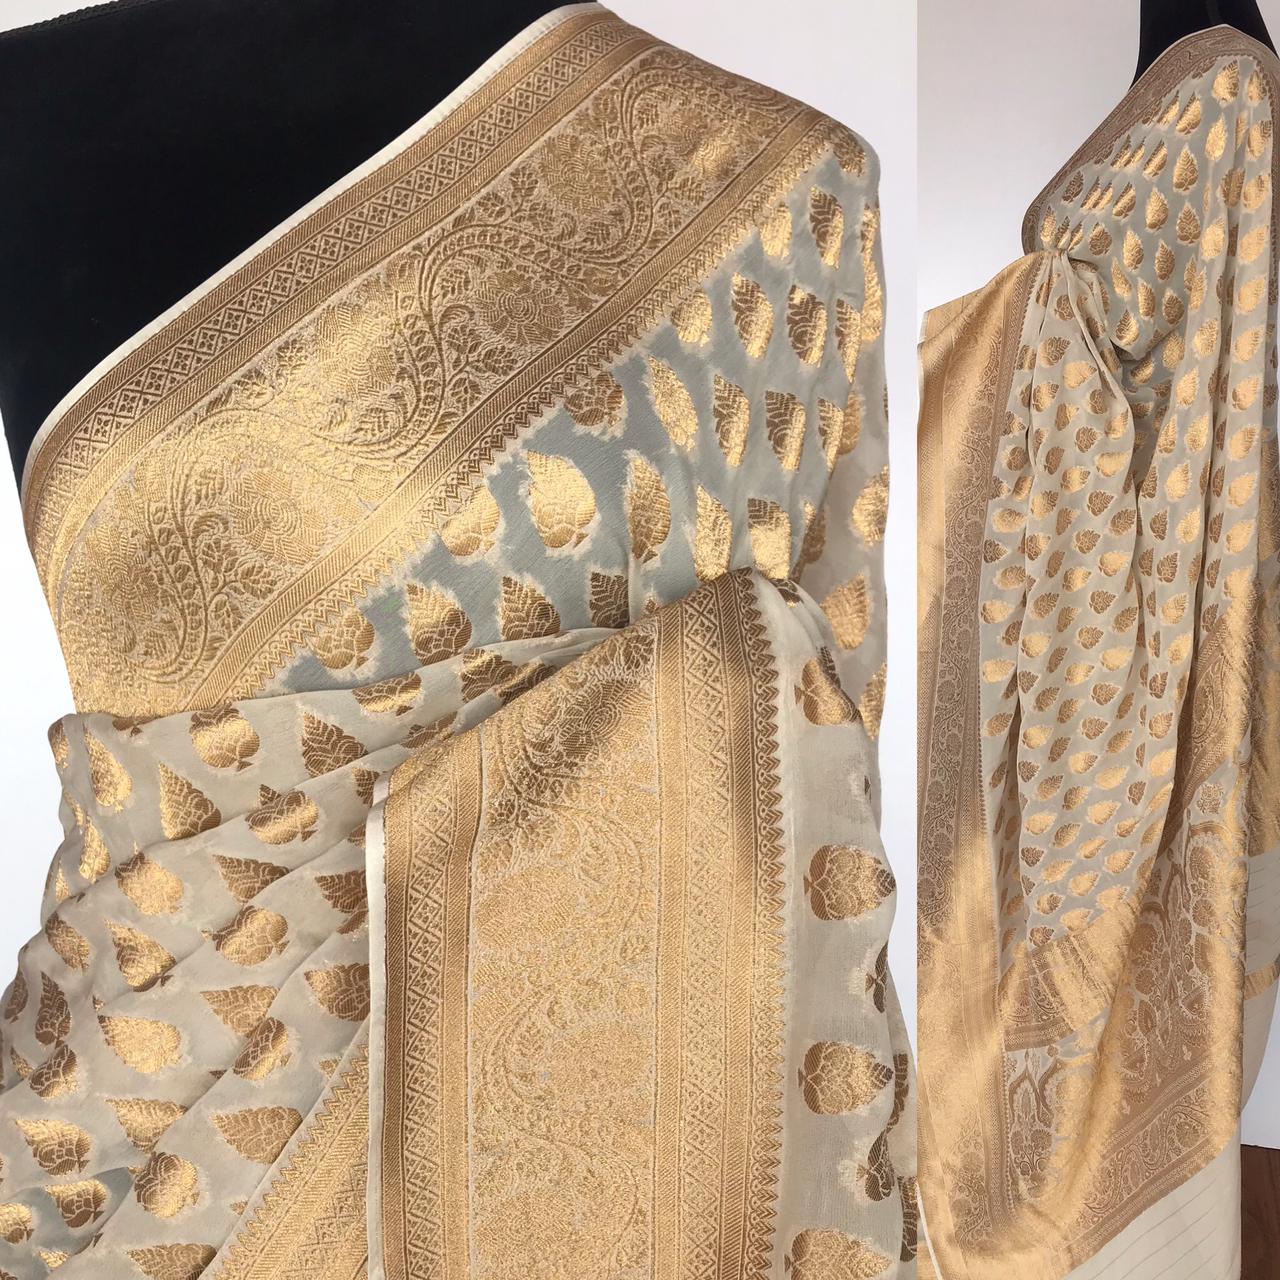 Ivory Banarasi Silk Saree in Georgette adorned with Gold Zari Motifs